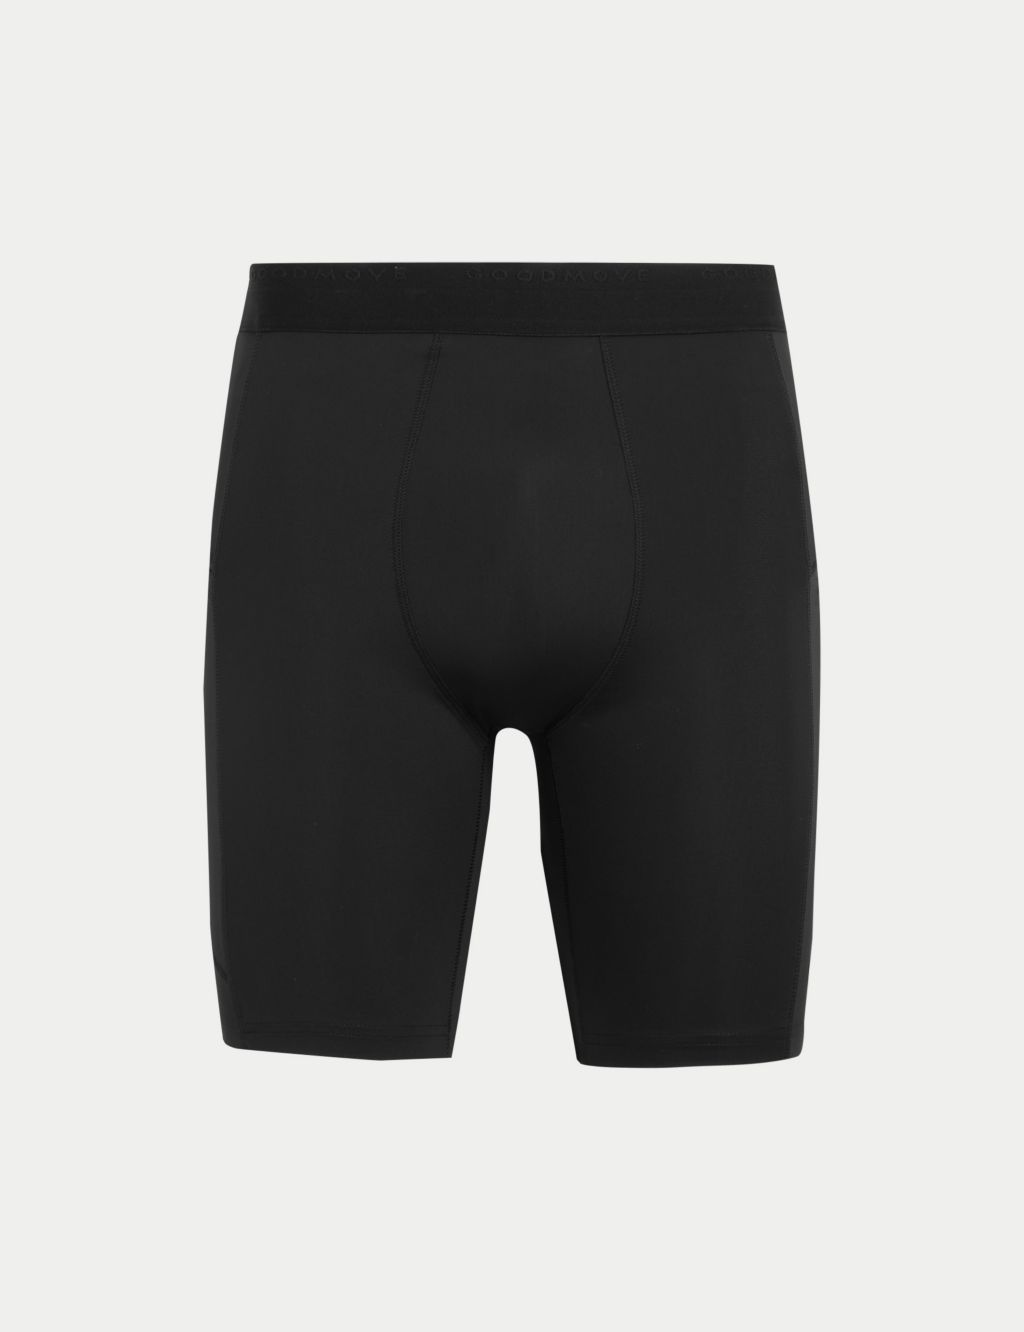 Base Layer Shorts | Goodmove | M&S